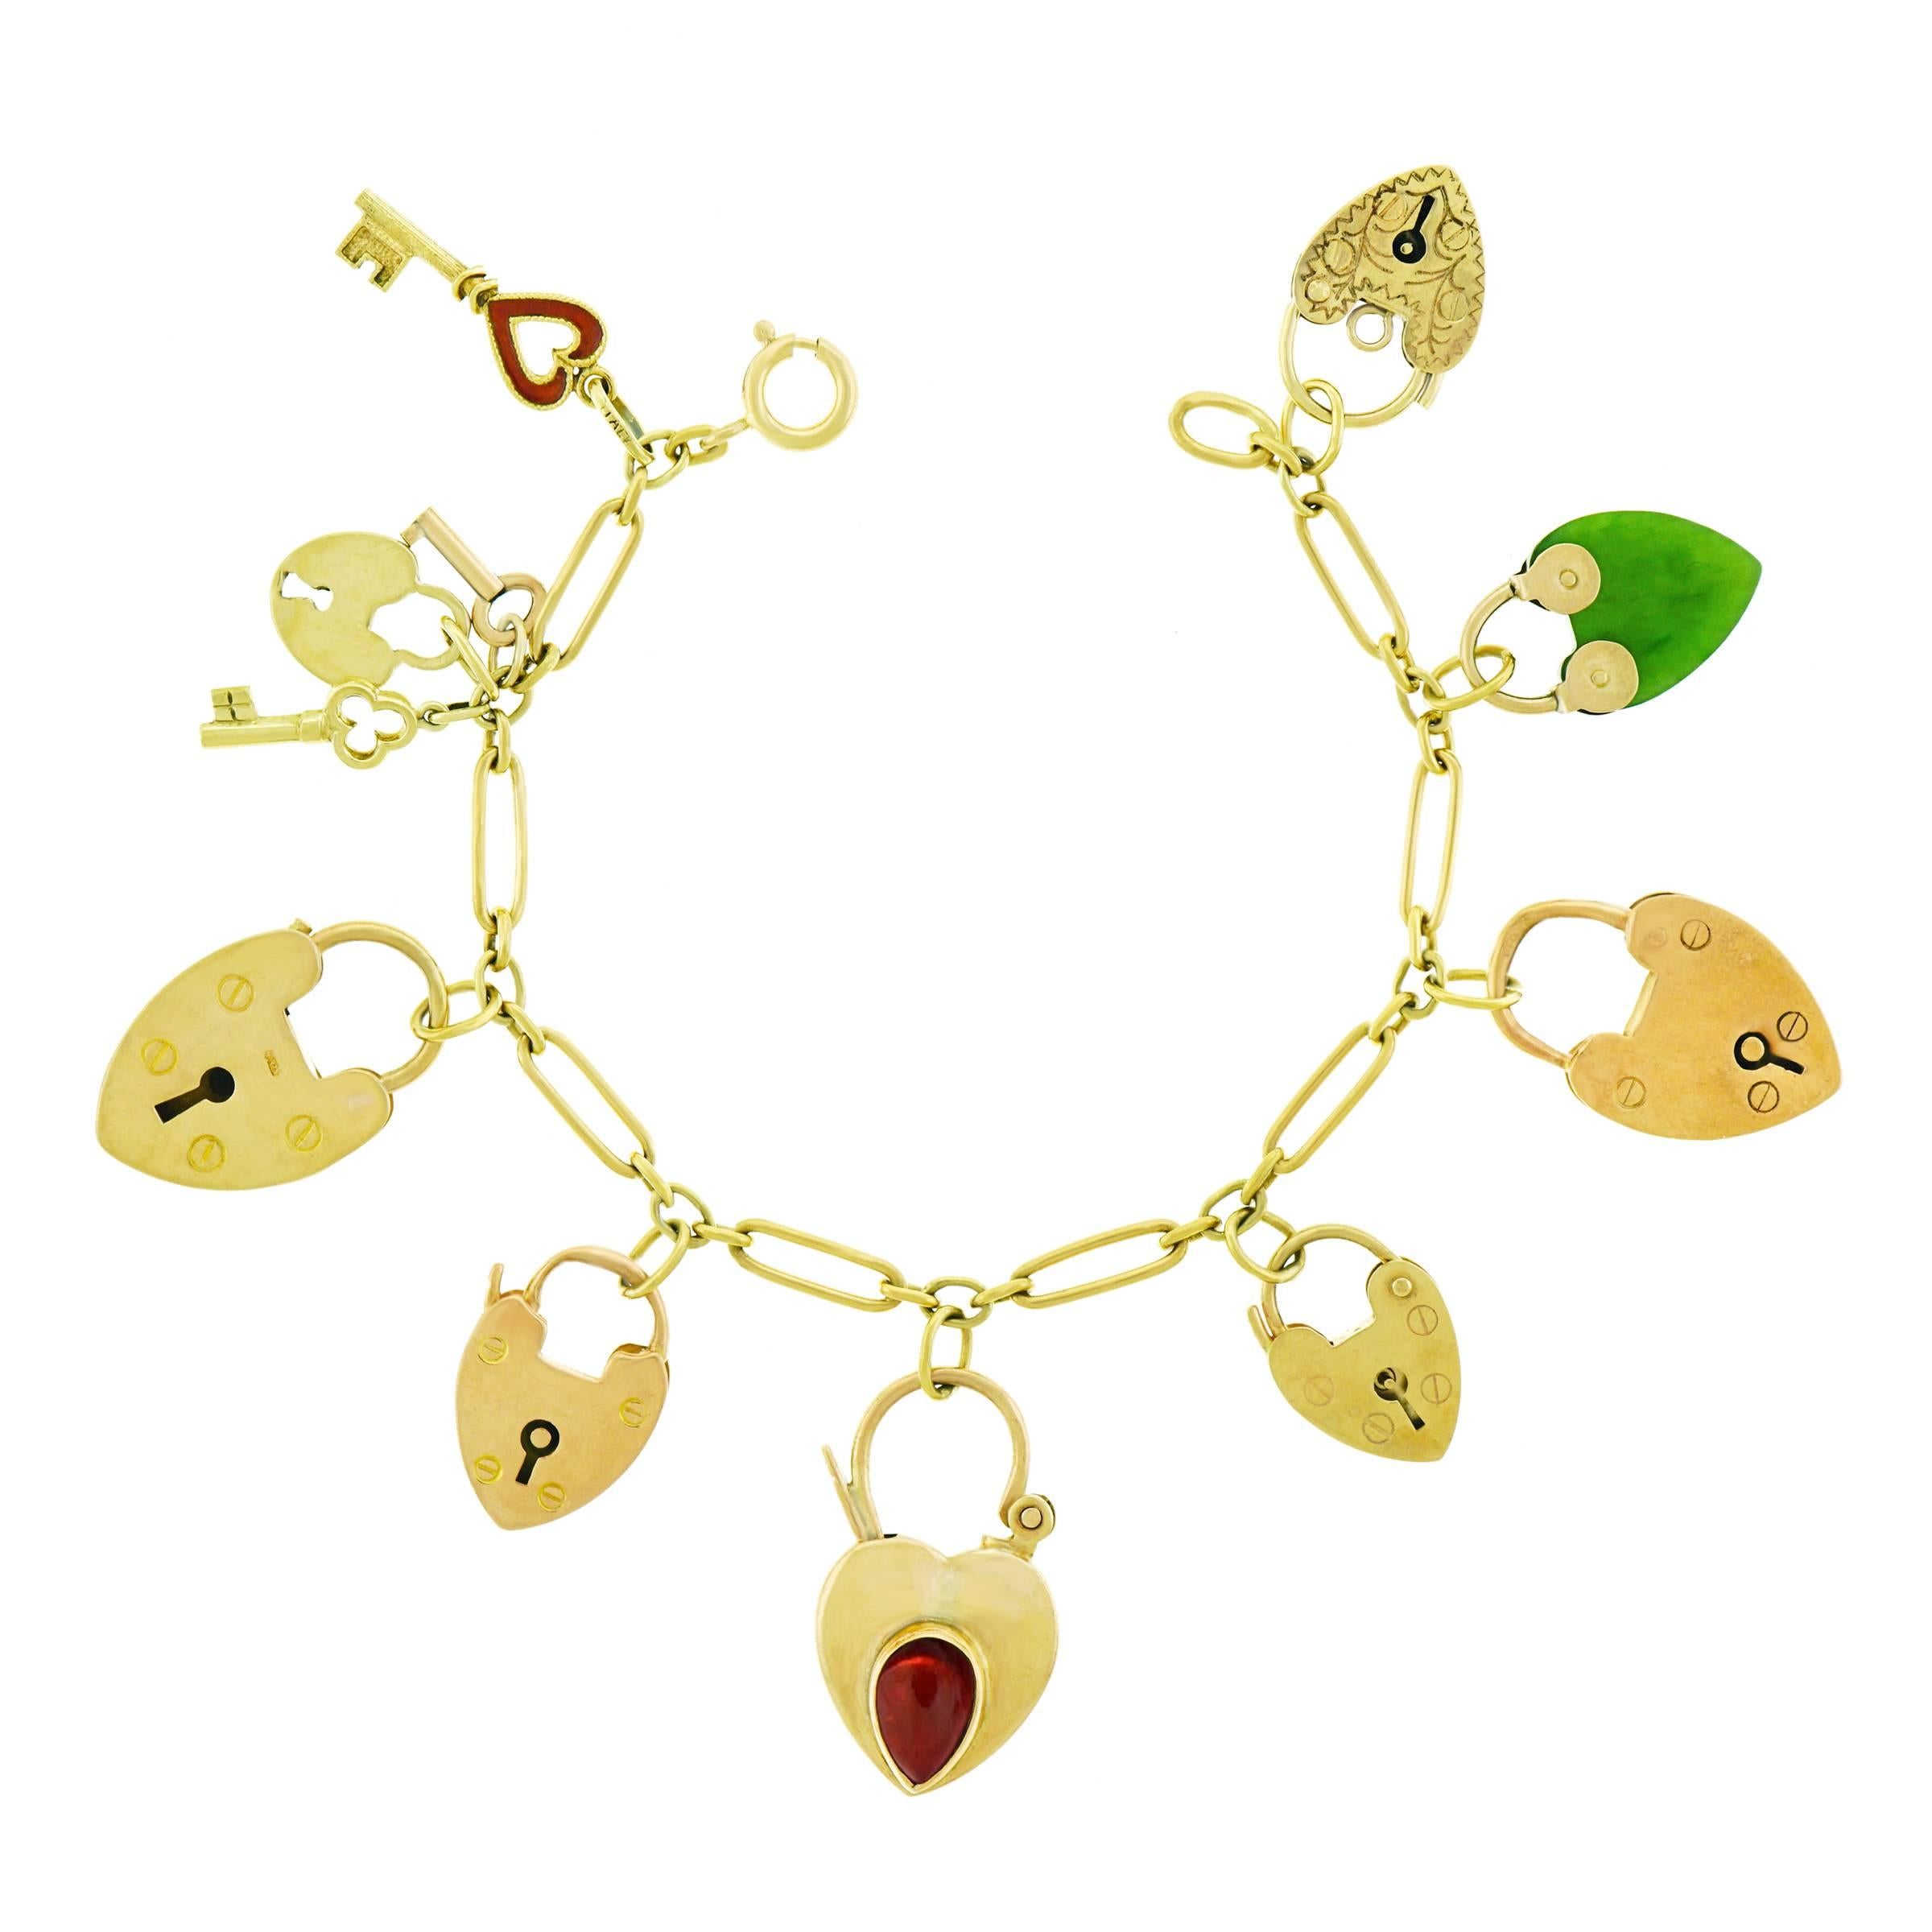 Antique Heart Locks and Keys Gold Charm Bracelet